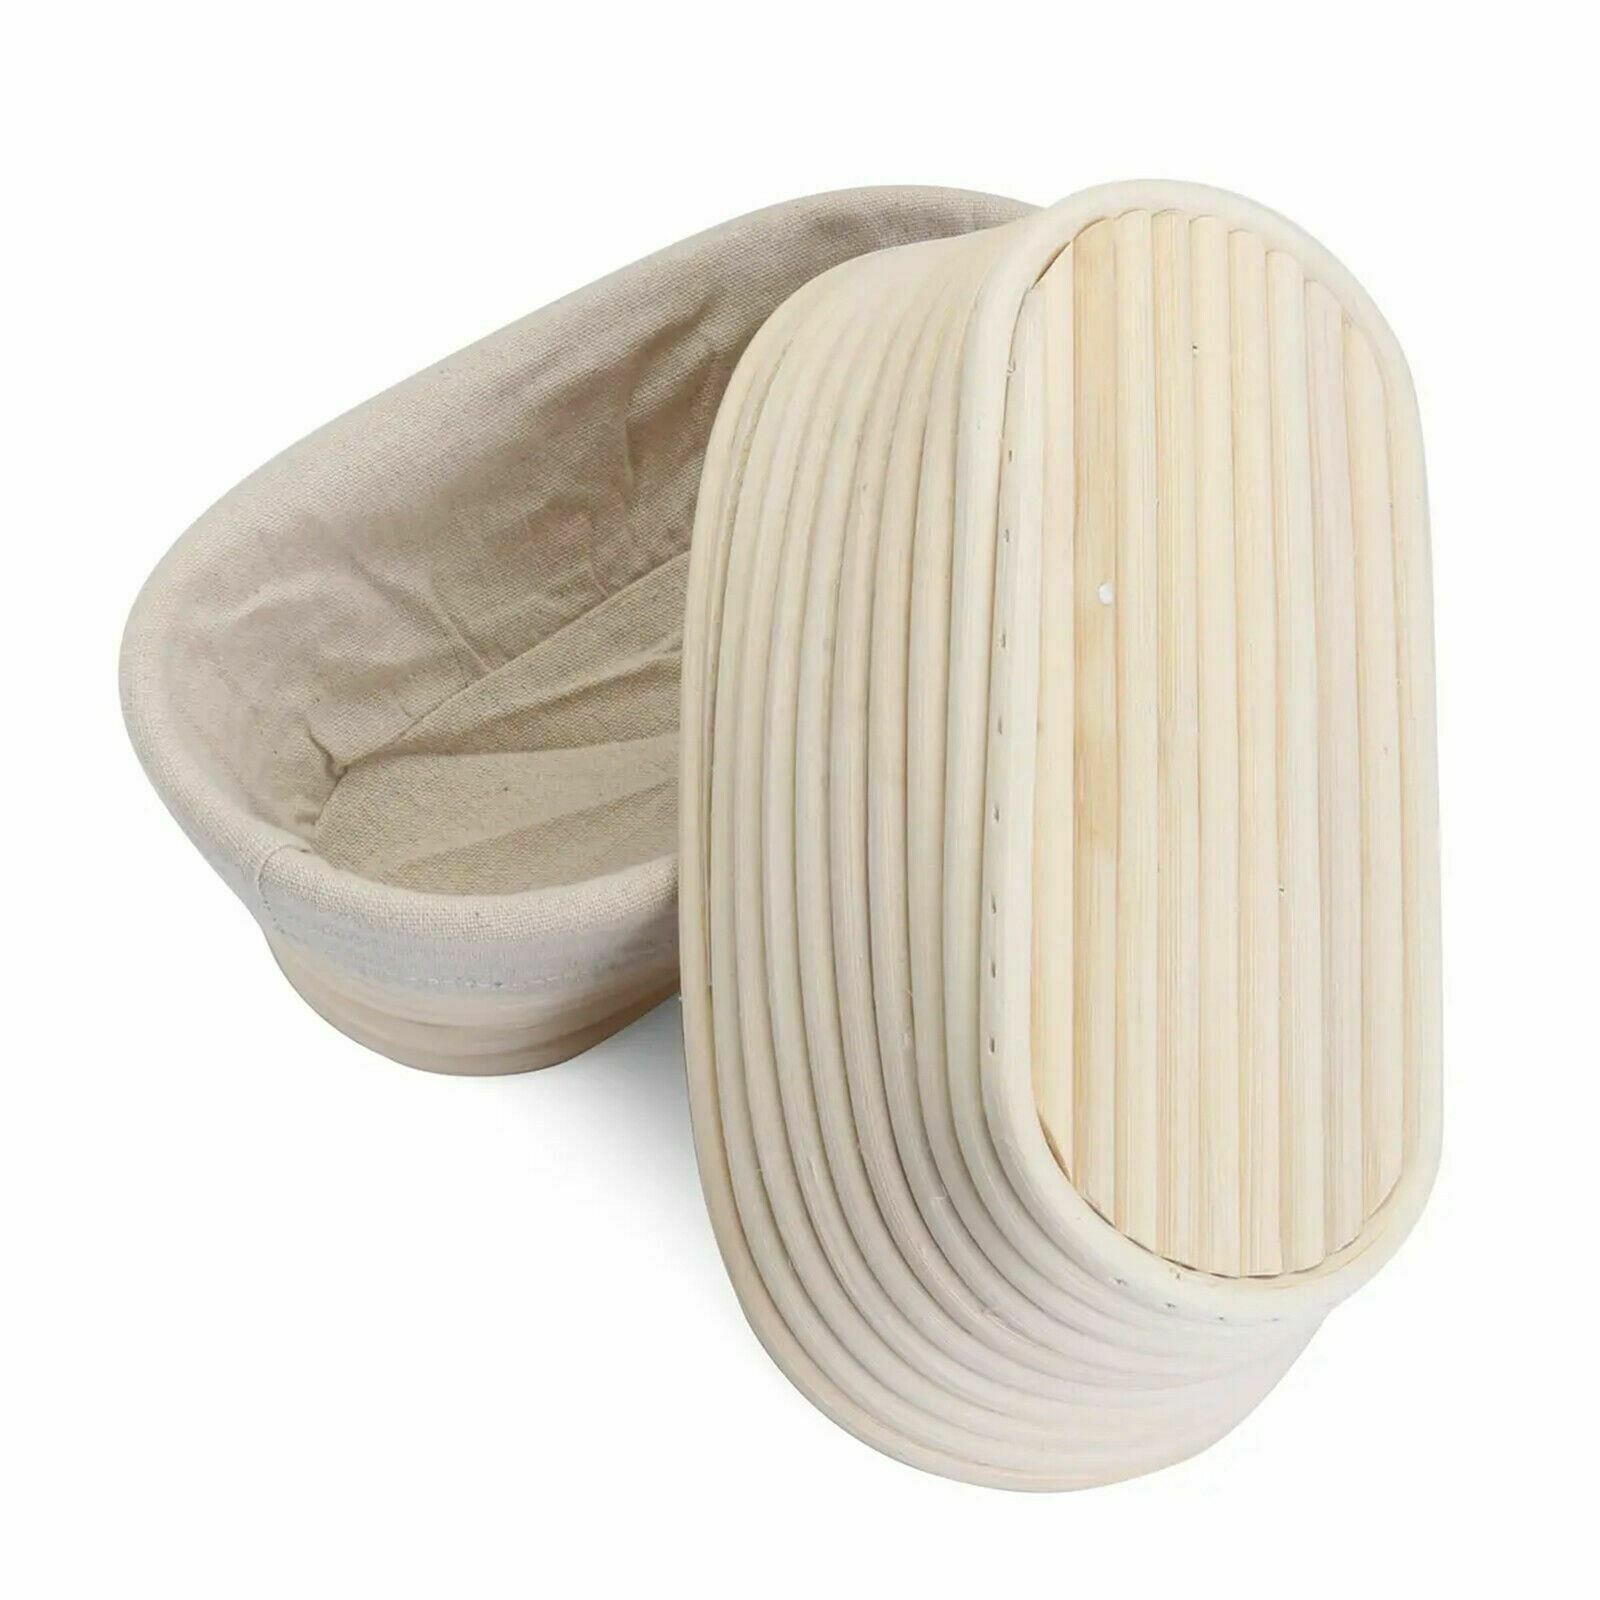 2pcs Oval Bread Sourdough Banneton Brotform Proving Proofing Rattan Basket Set